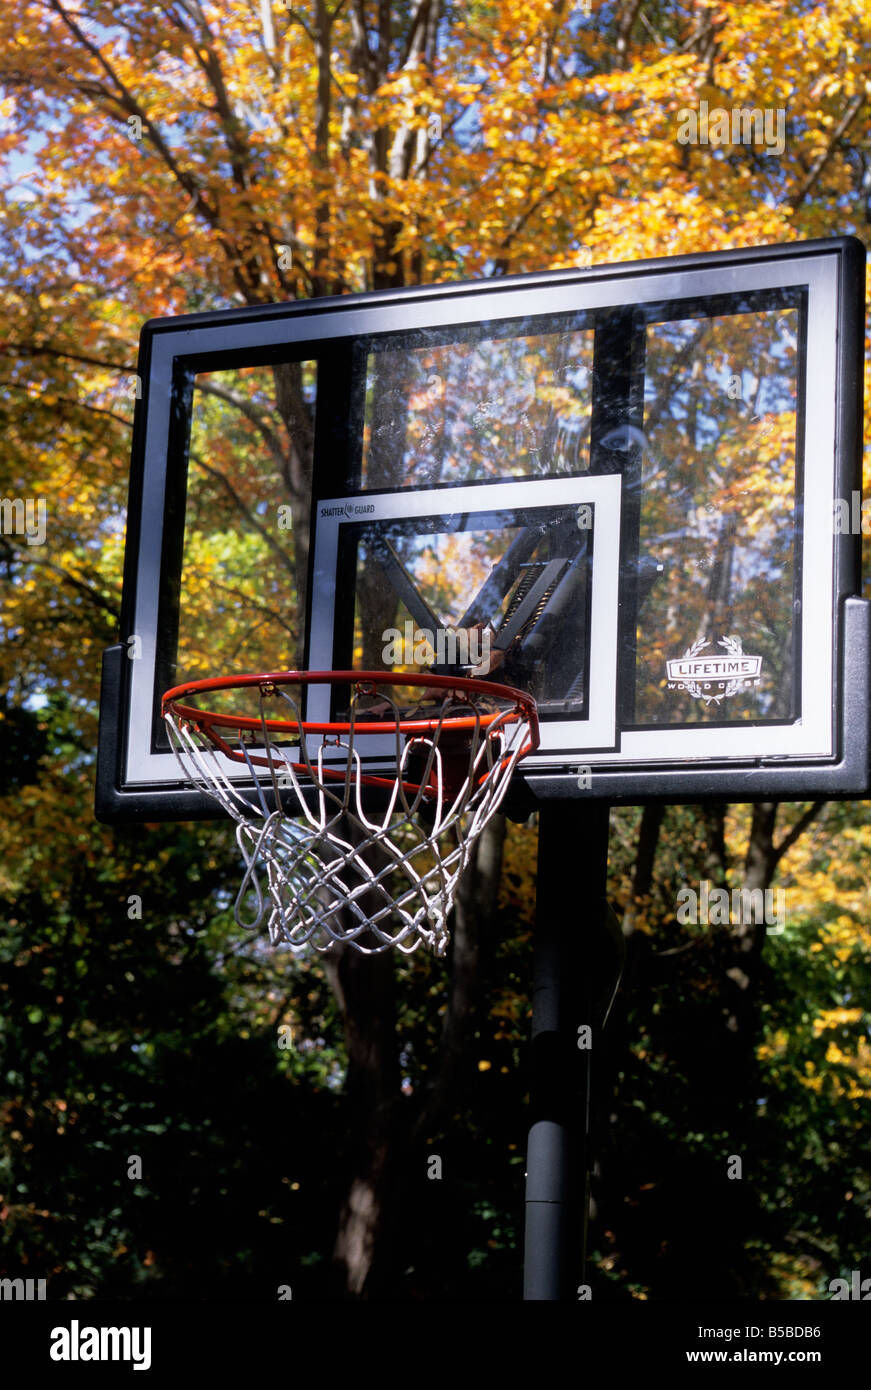 USA Connecticut Autumn Day Basketball Hoop in American Suburbs Stock Photo